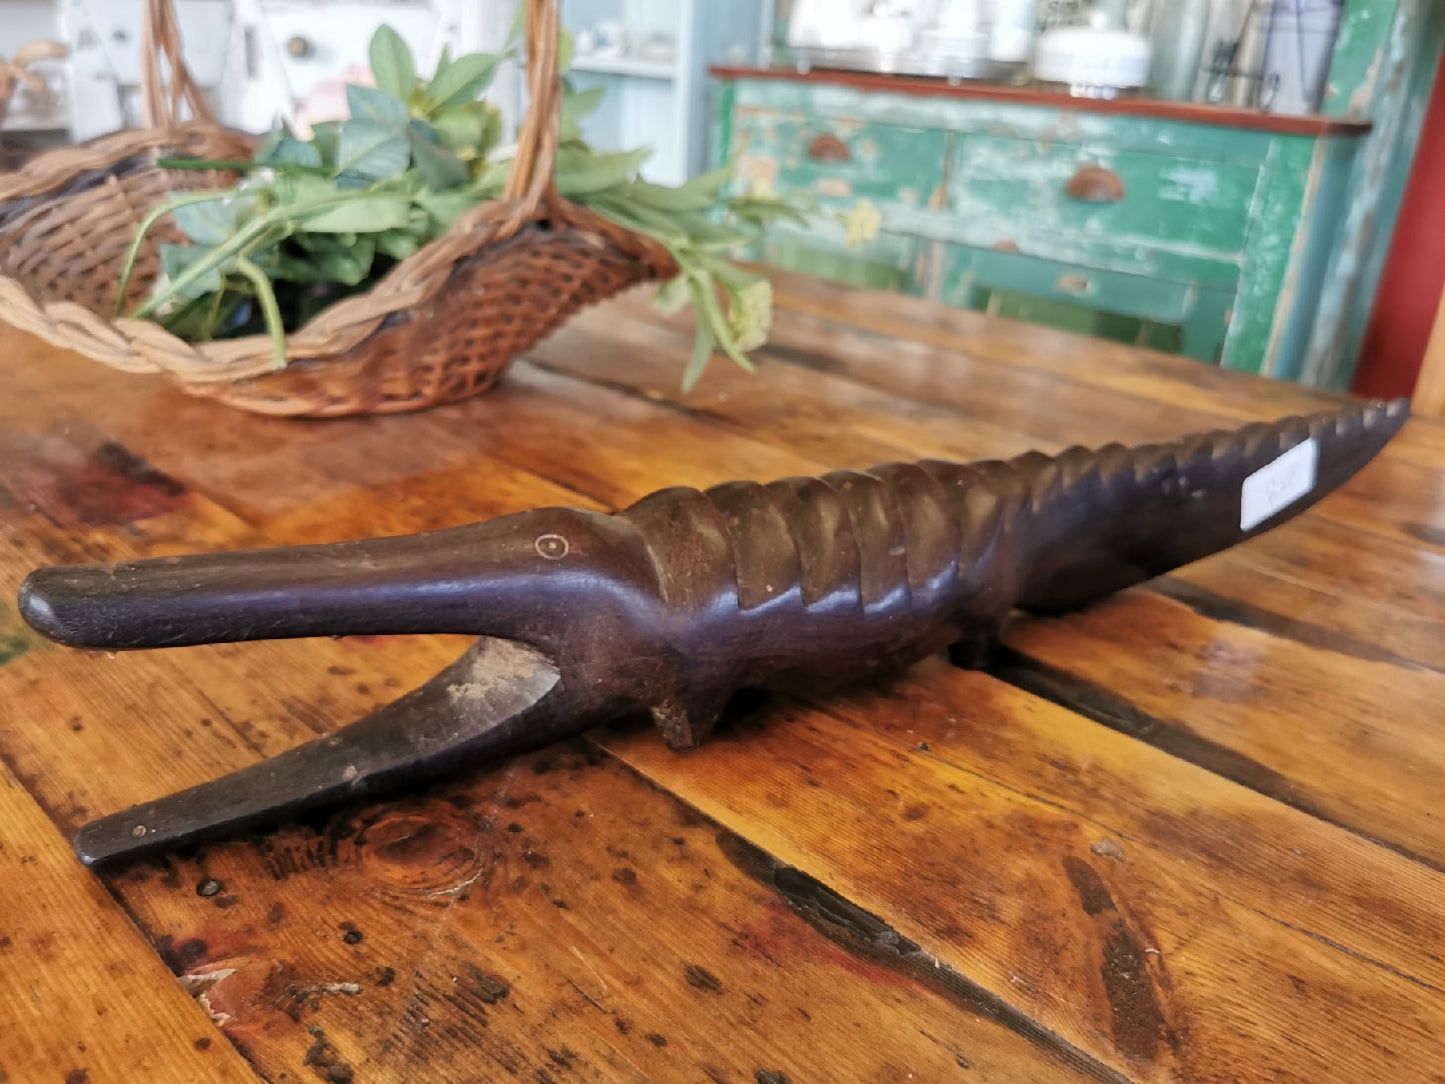 Wooden crocodile figurine